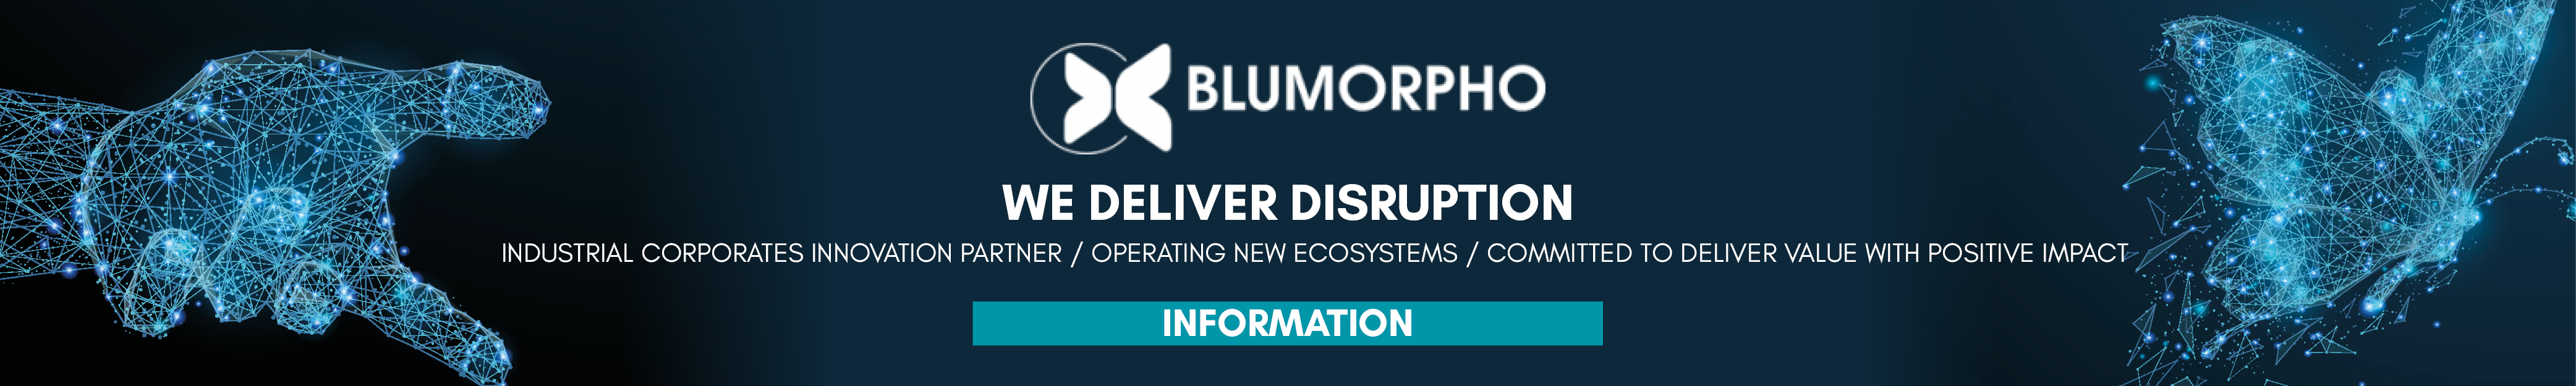 blumorpho advertising information